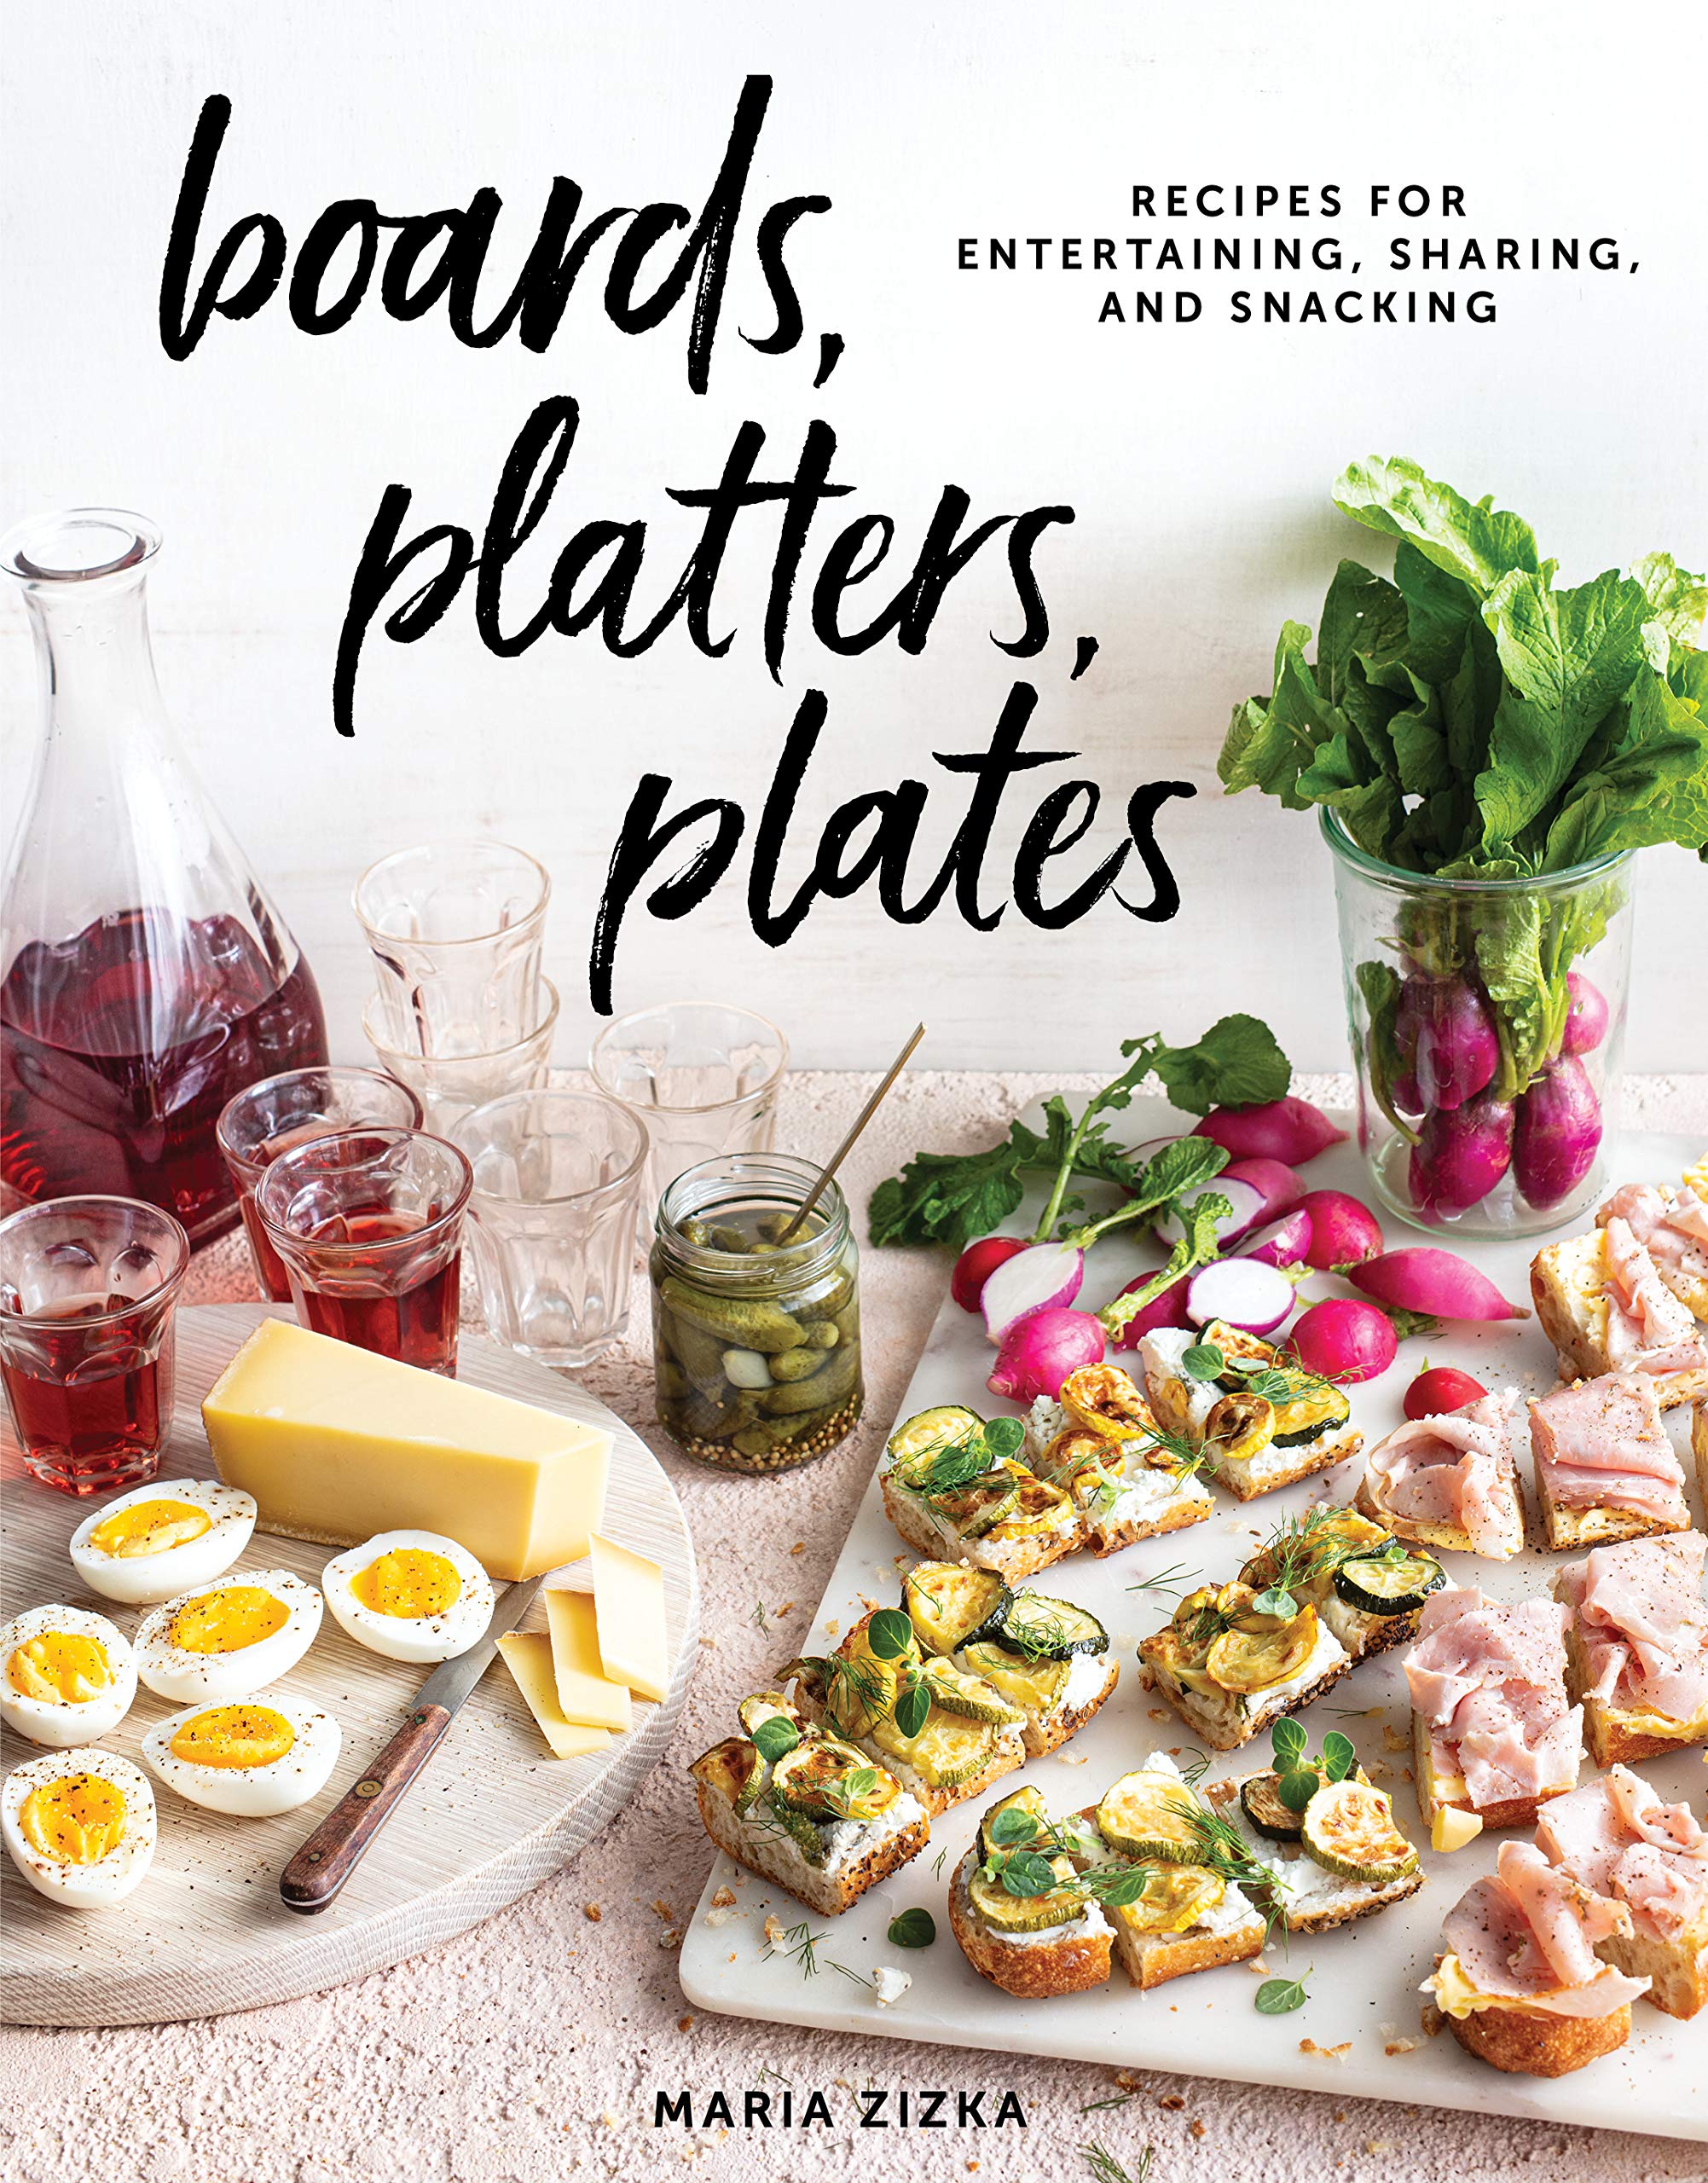 Cookbook - Boards, Platters, Plates